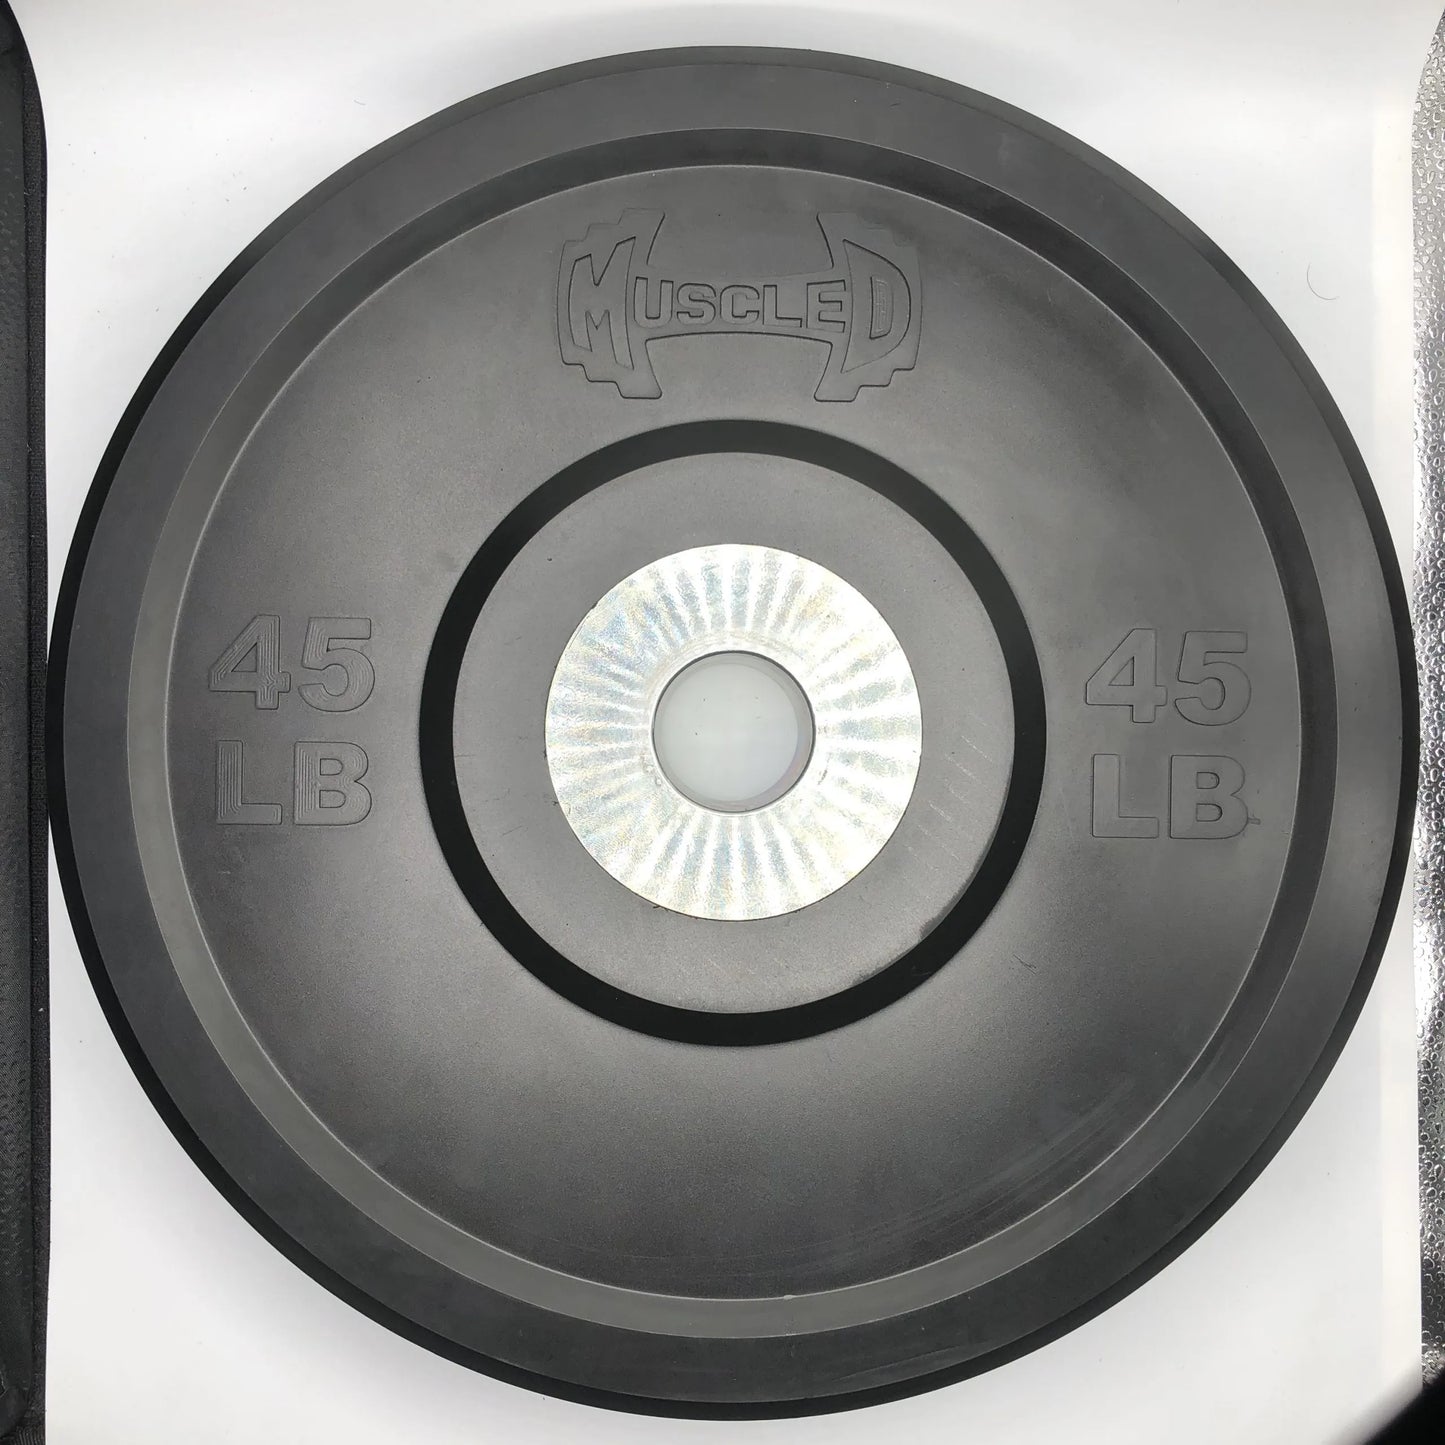 Pro Bumper Training Plates with Center Steel Hub (10,15,25,35,45 lb) per Pair